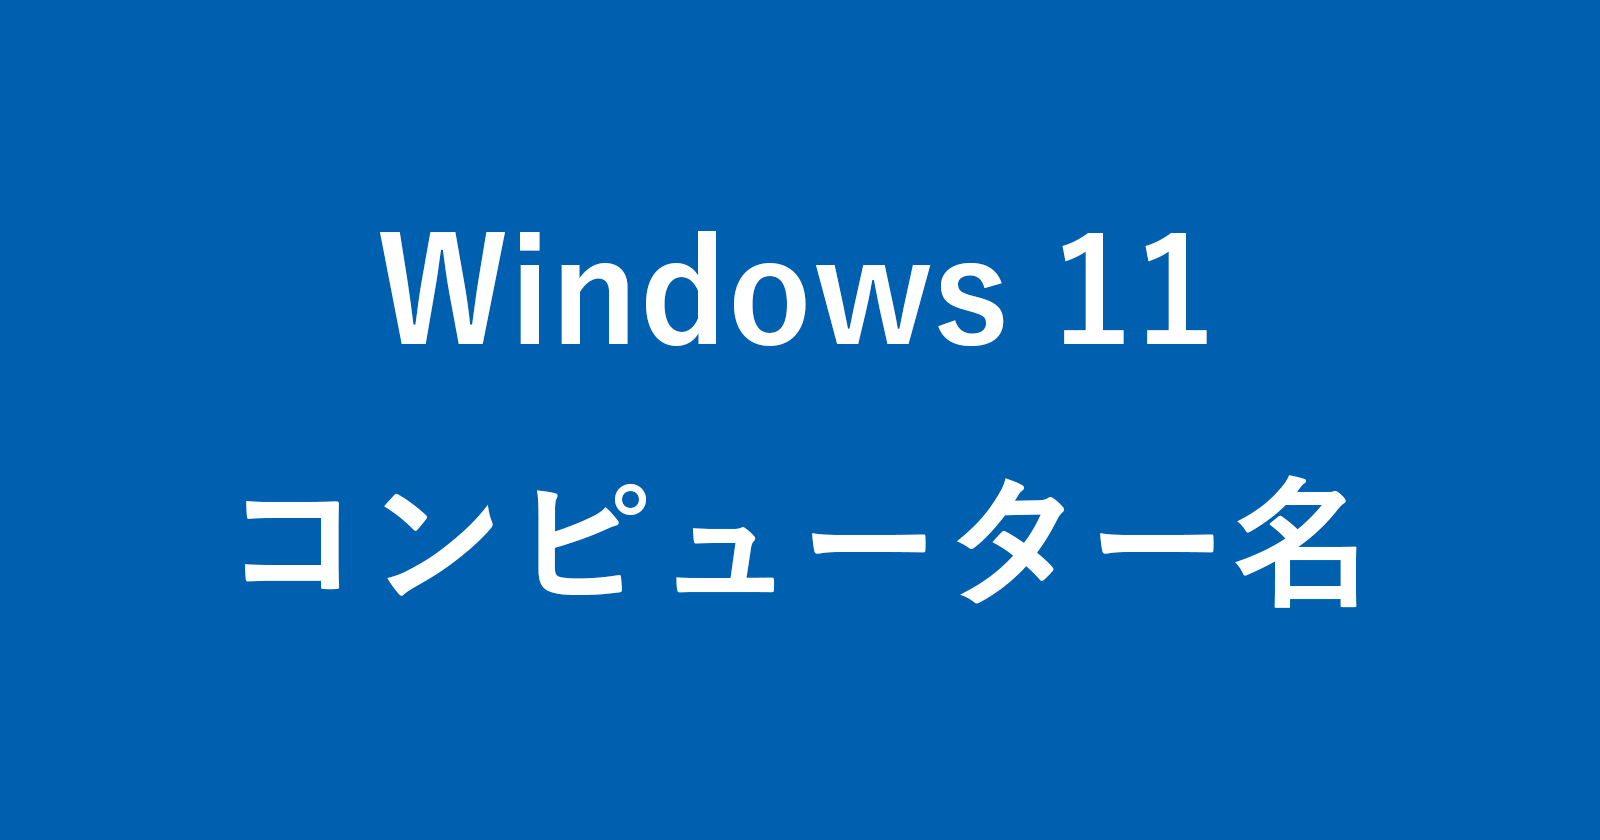 windows 11 computer name